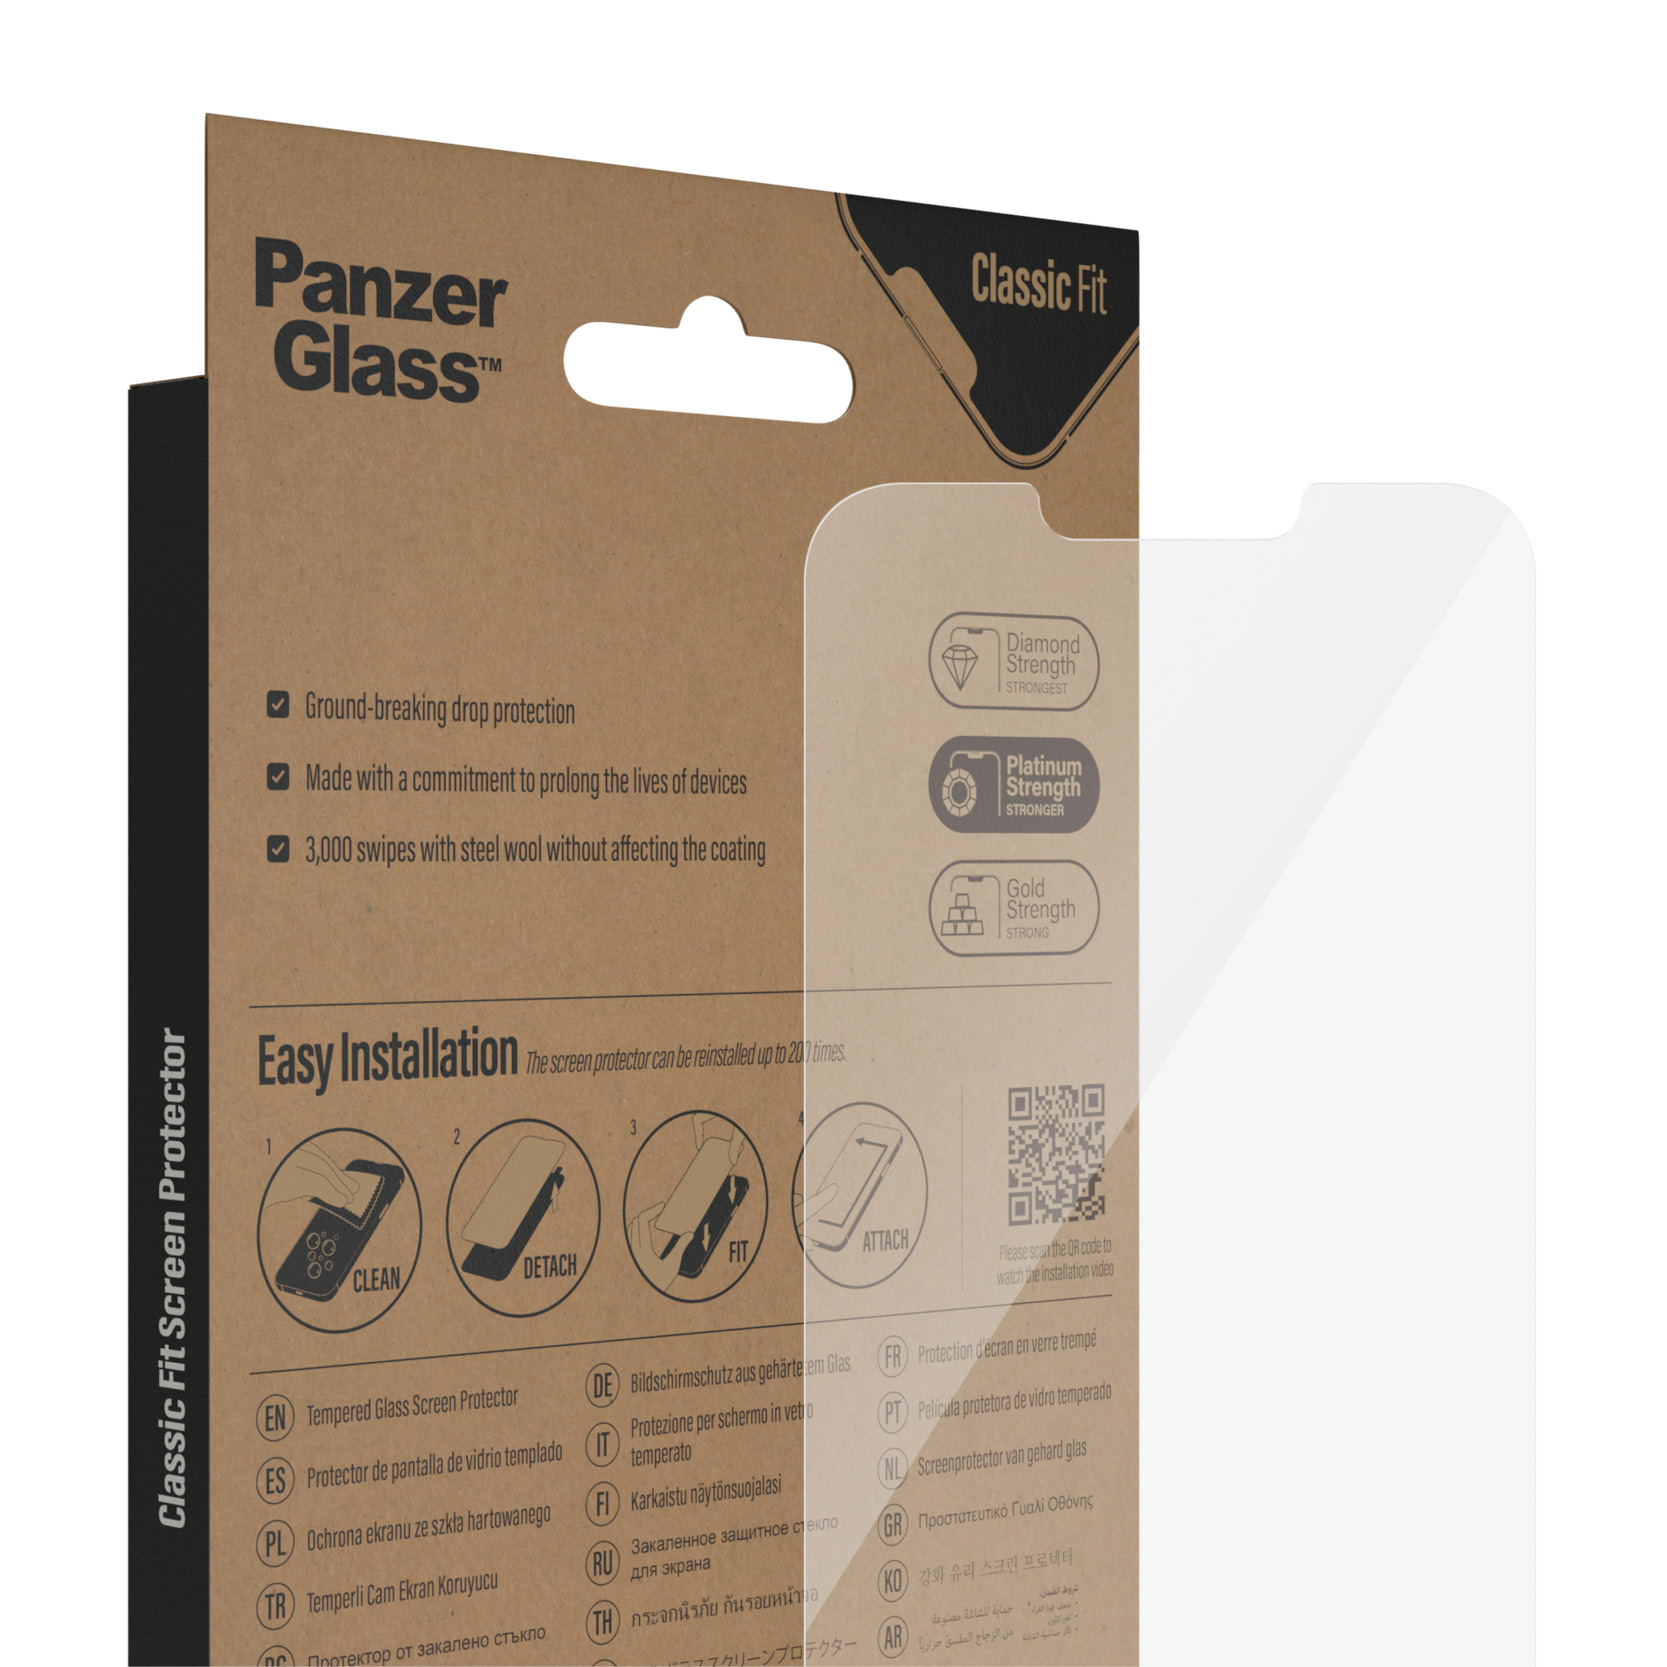 Protector de ecran PanzerGlass Apple iPhone 14 Plus | 13 Pro Max | Fit clasic thumb